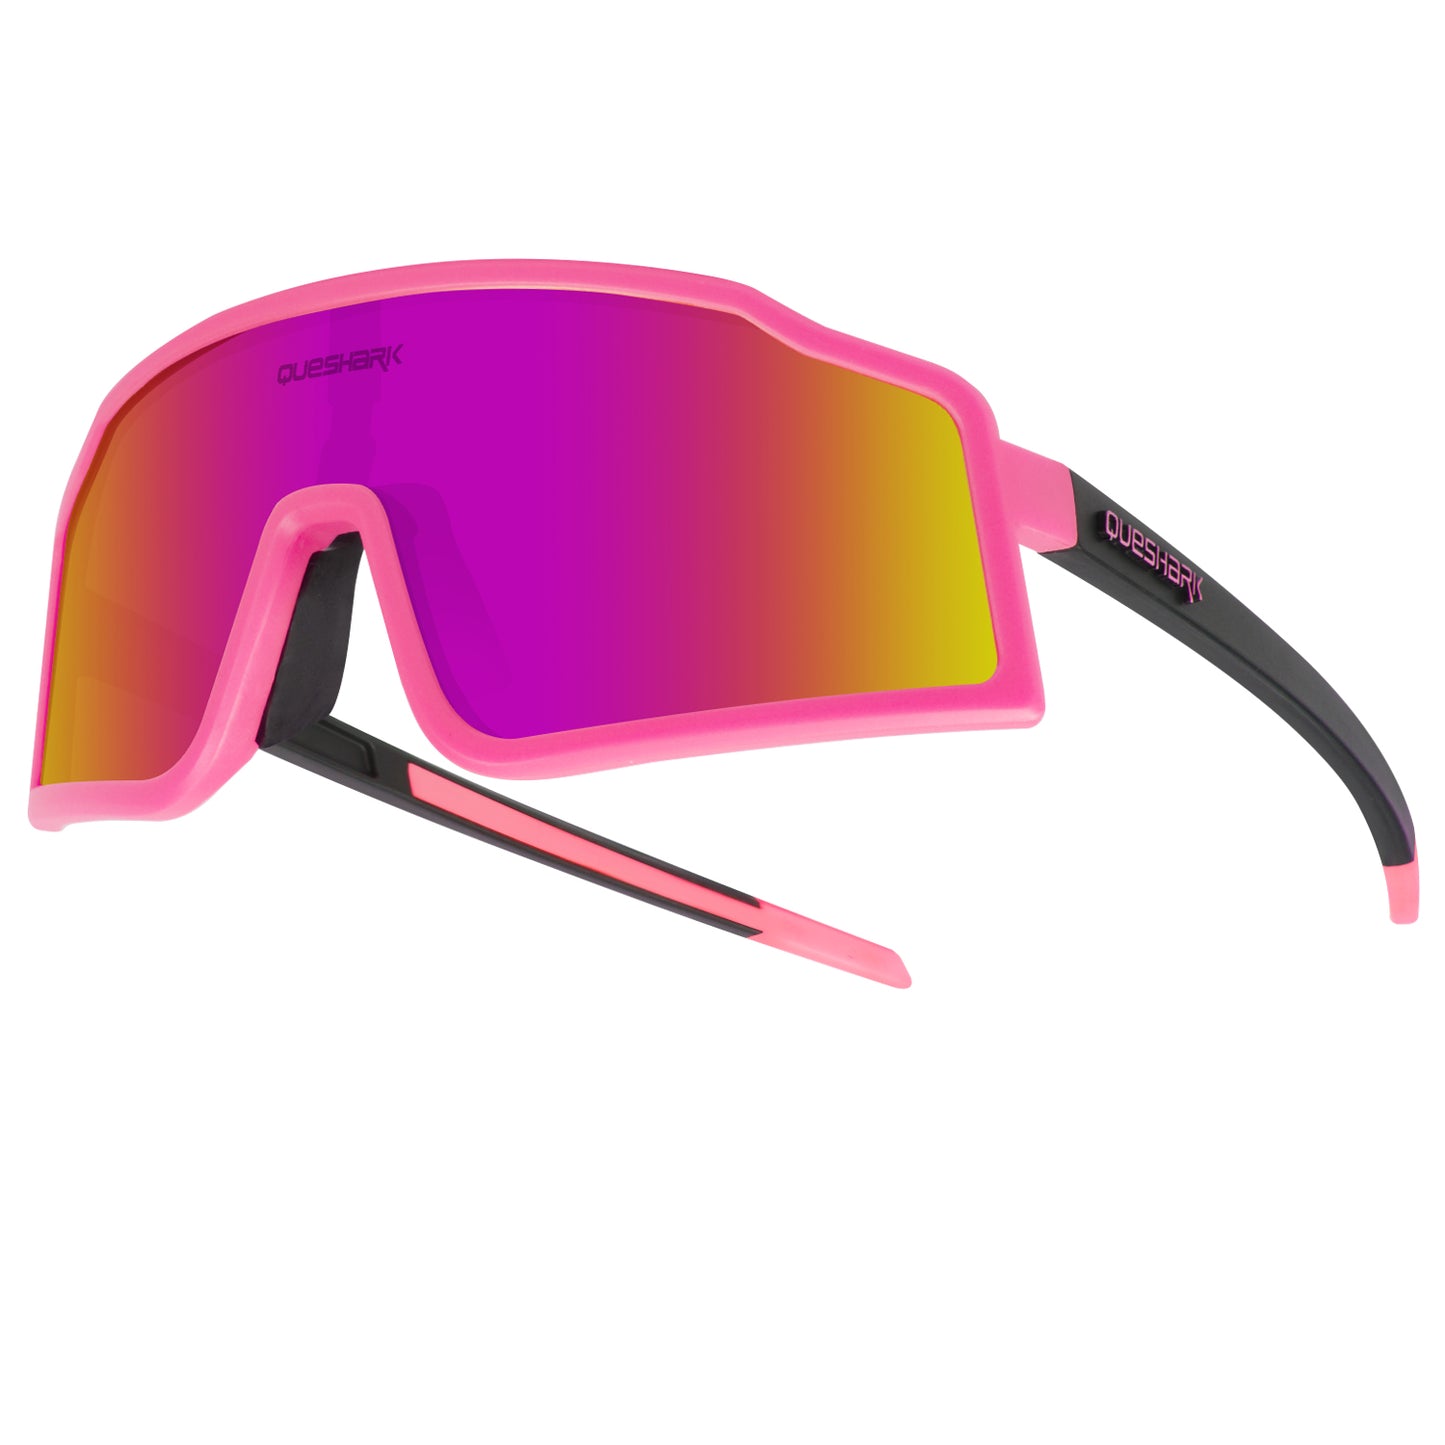 <transcy>QE54 Gafas deportivas rosadas Gafas de sol polarizadas para bicicleta Gafas de ciclismo 3 lentes / juego</transcy>